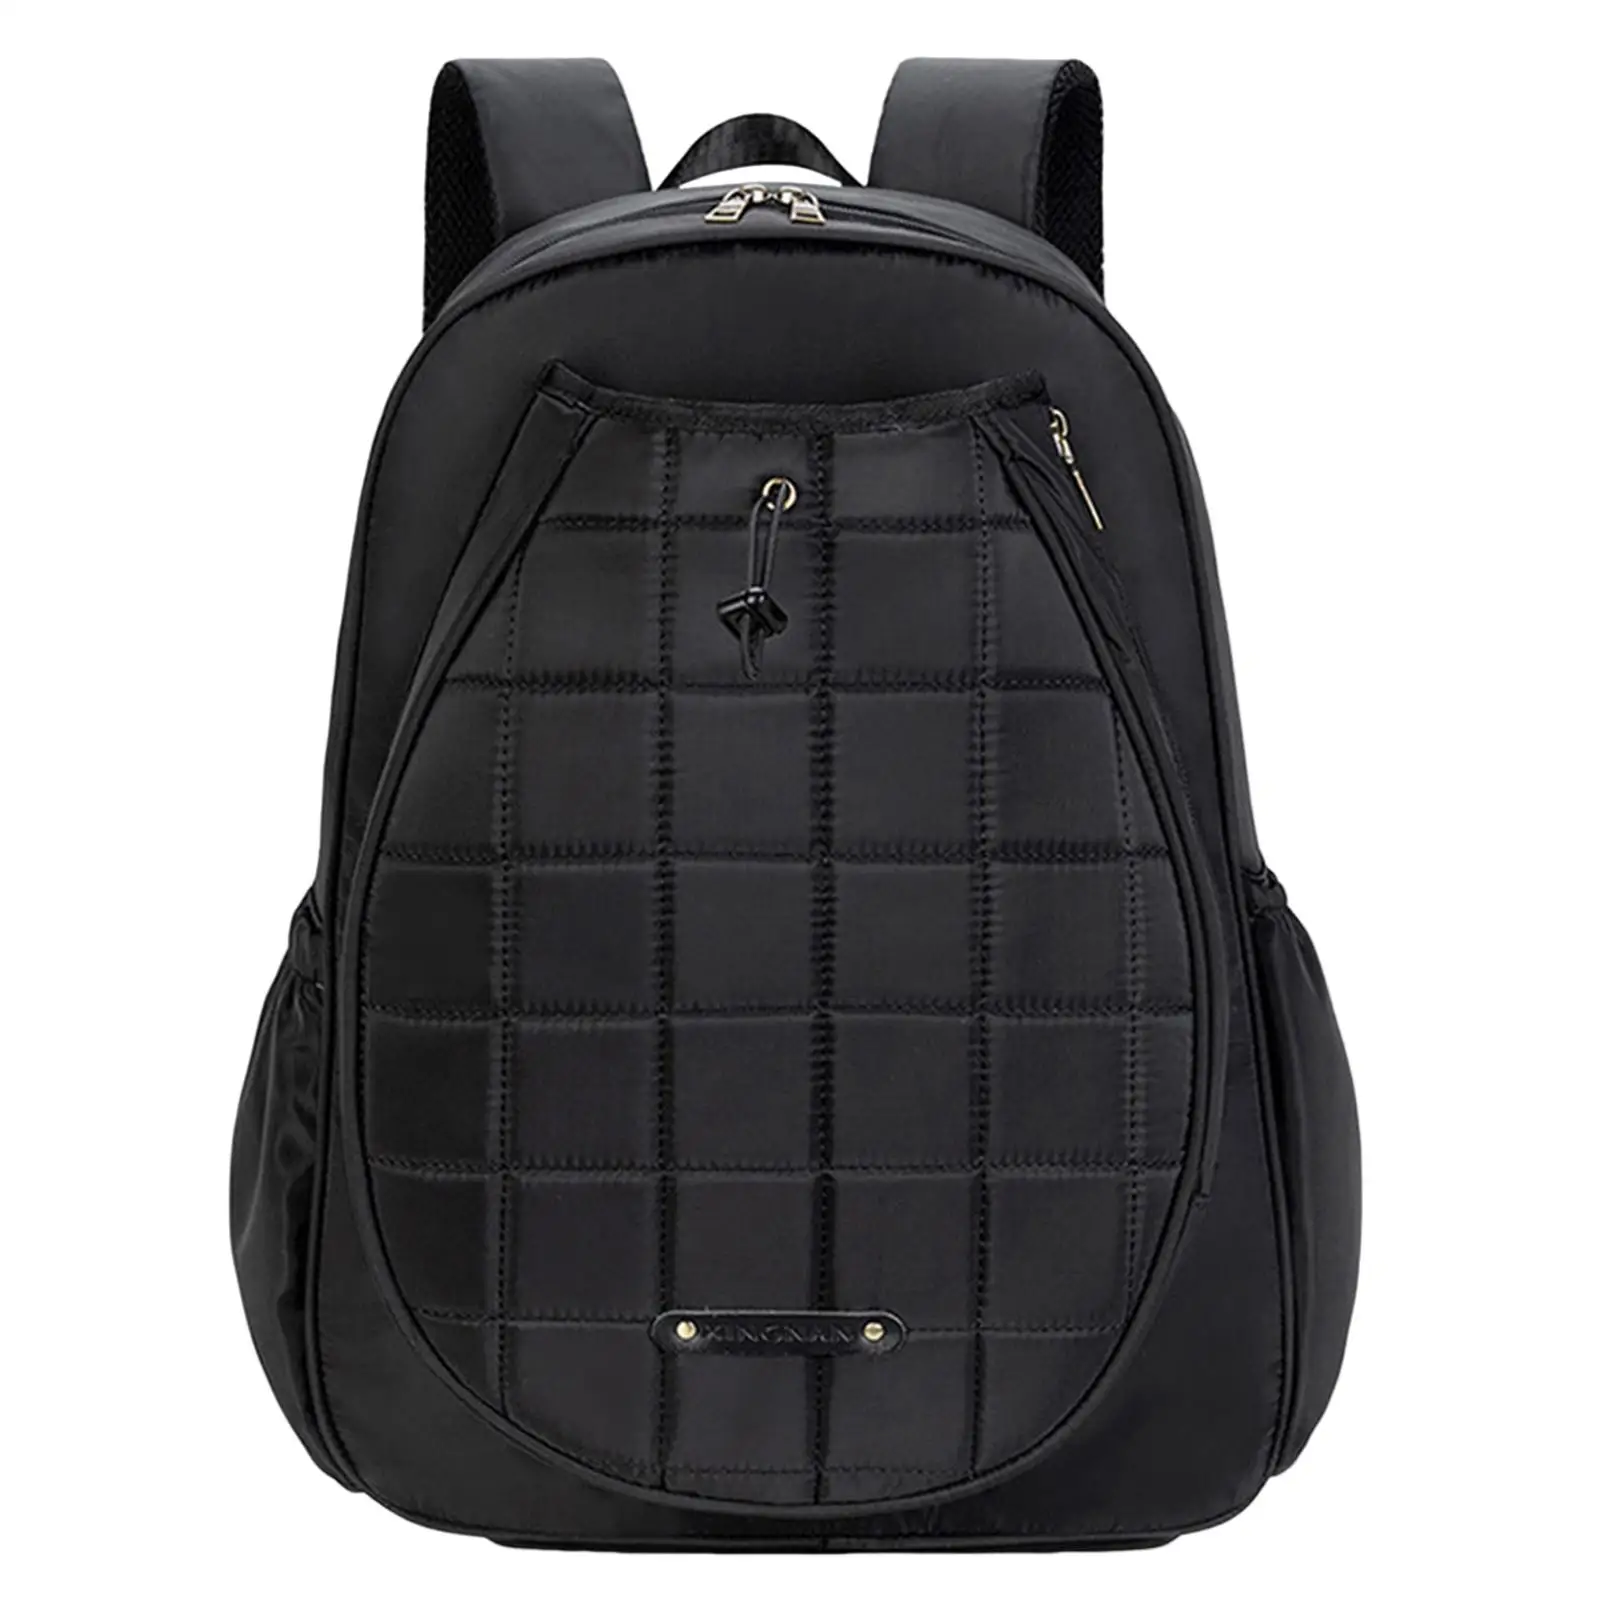 Tennis Backpack Tennis Bag Multifunctional Sport Bag Racquet Carrying Bag Tennis Racket Bag for Tennis Racket Balls Accessories